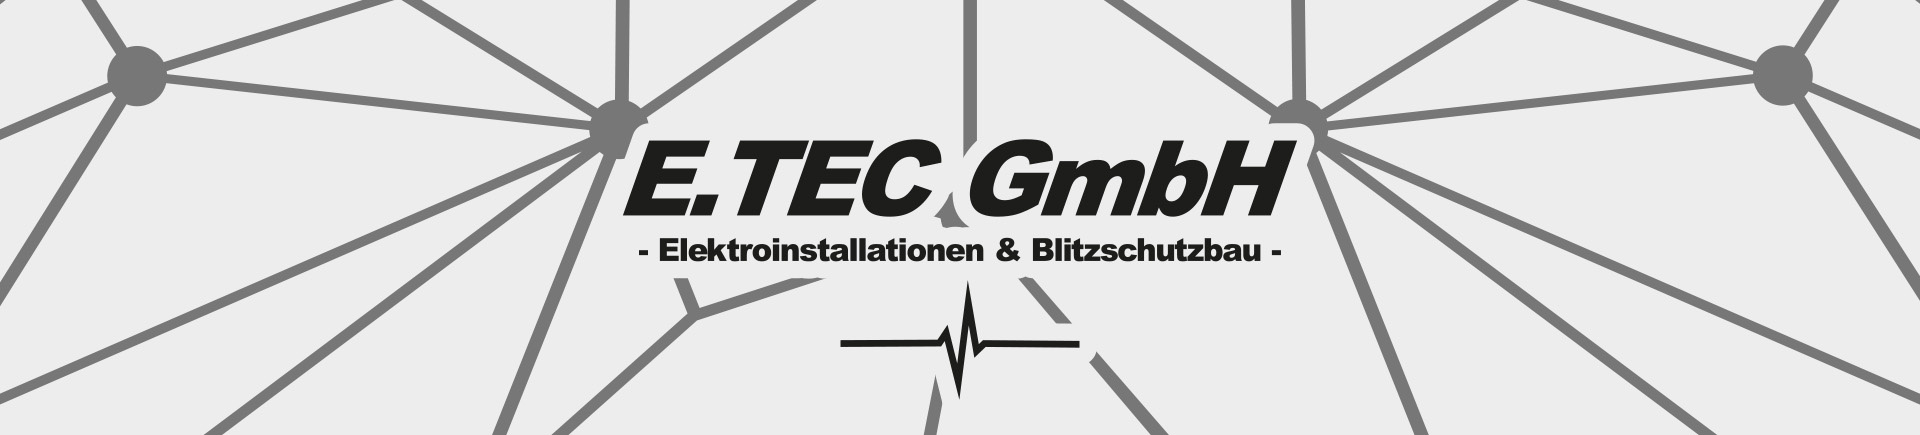 E.TEC GmbH in Bad Lobenstein